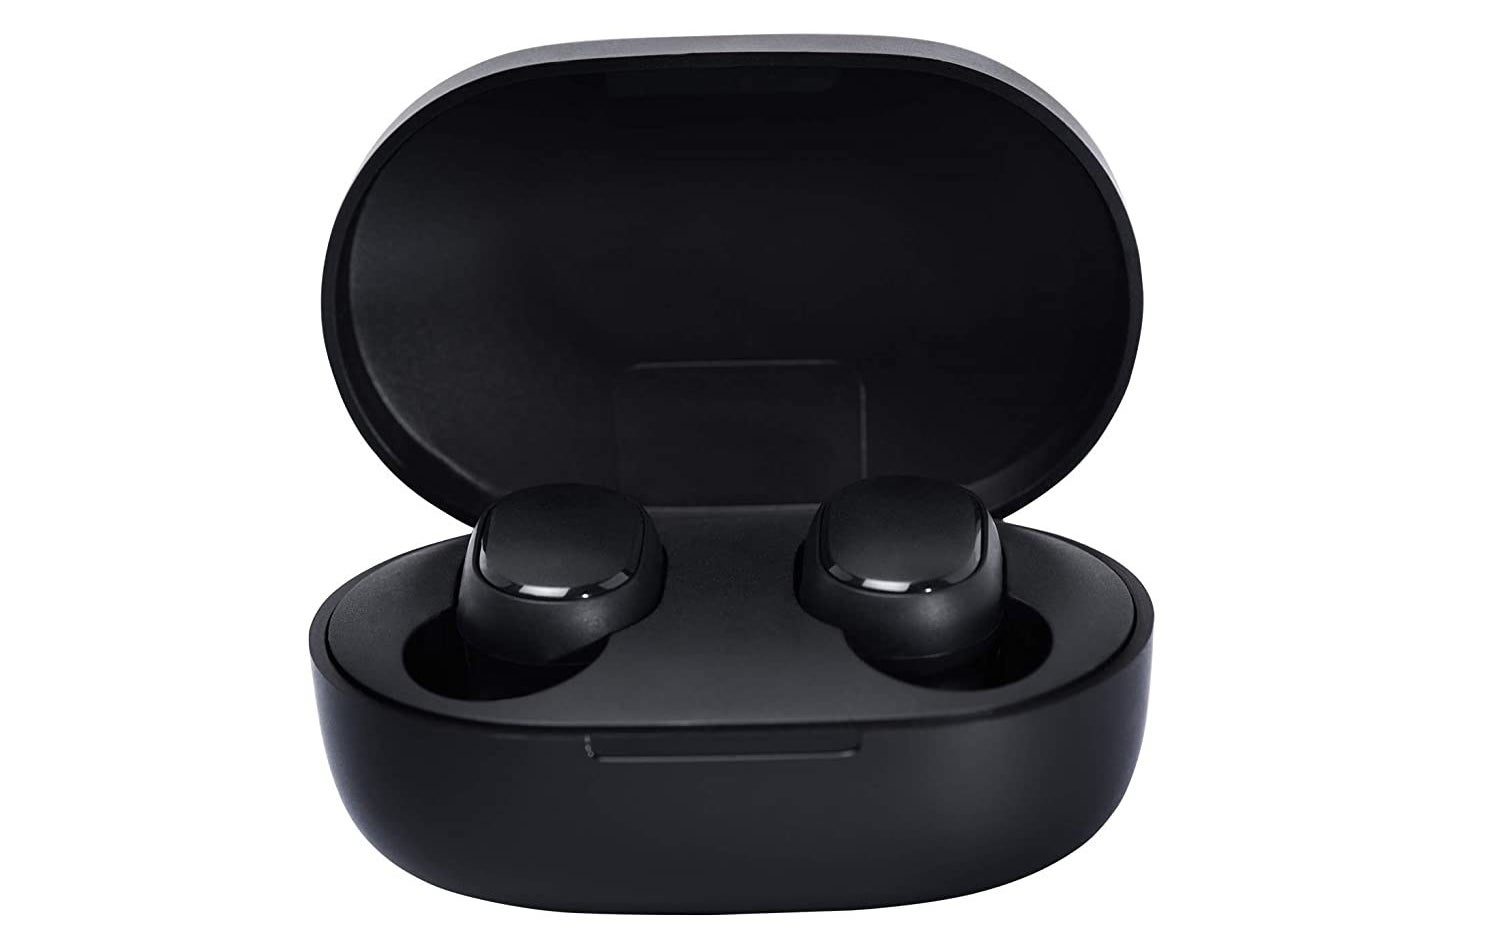 Redmi Earbuds S in black.